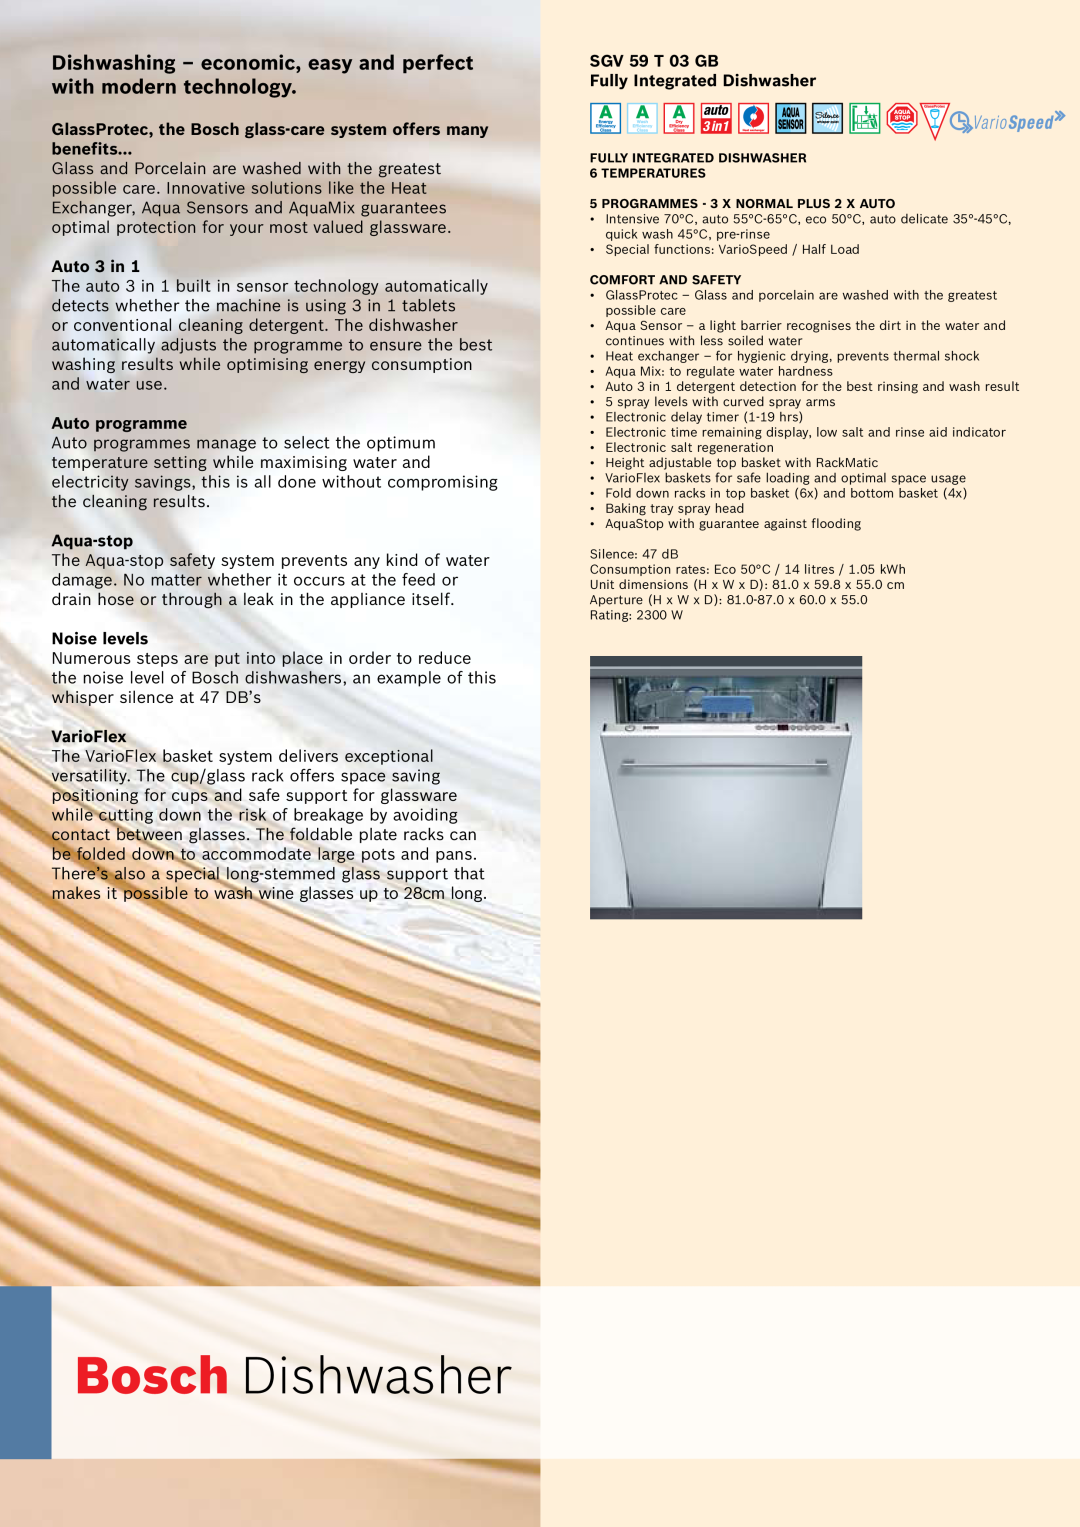 Bosch Appliances Oven Carriage manual Bosch Dishwasher, Auto 3 in, Auto programme, Aqua-stop, Noise levels, VarioFlex 